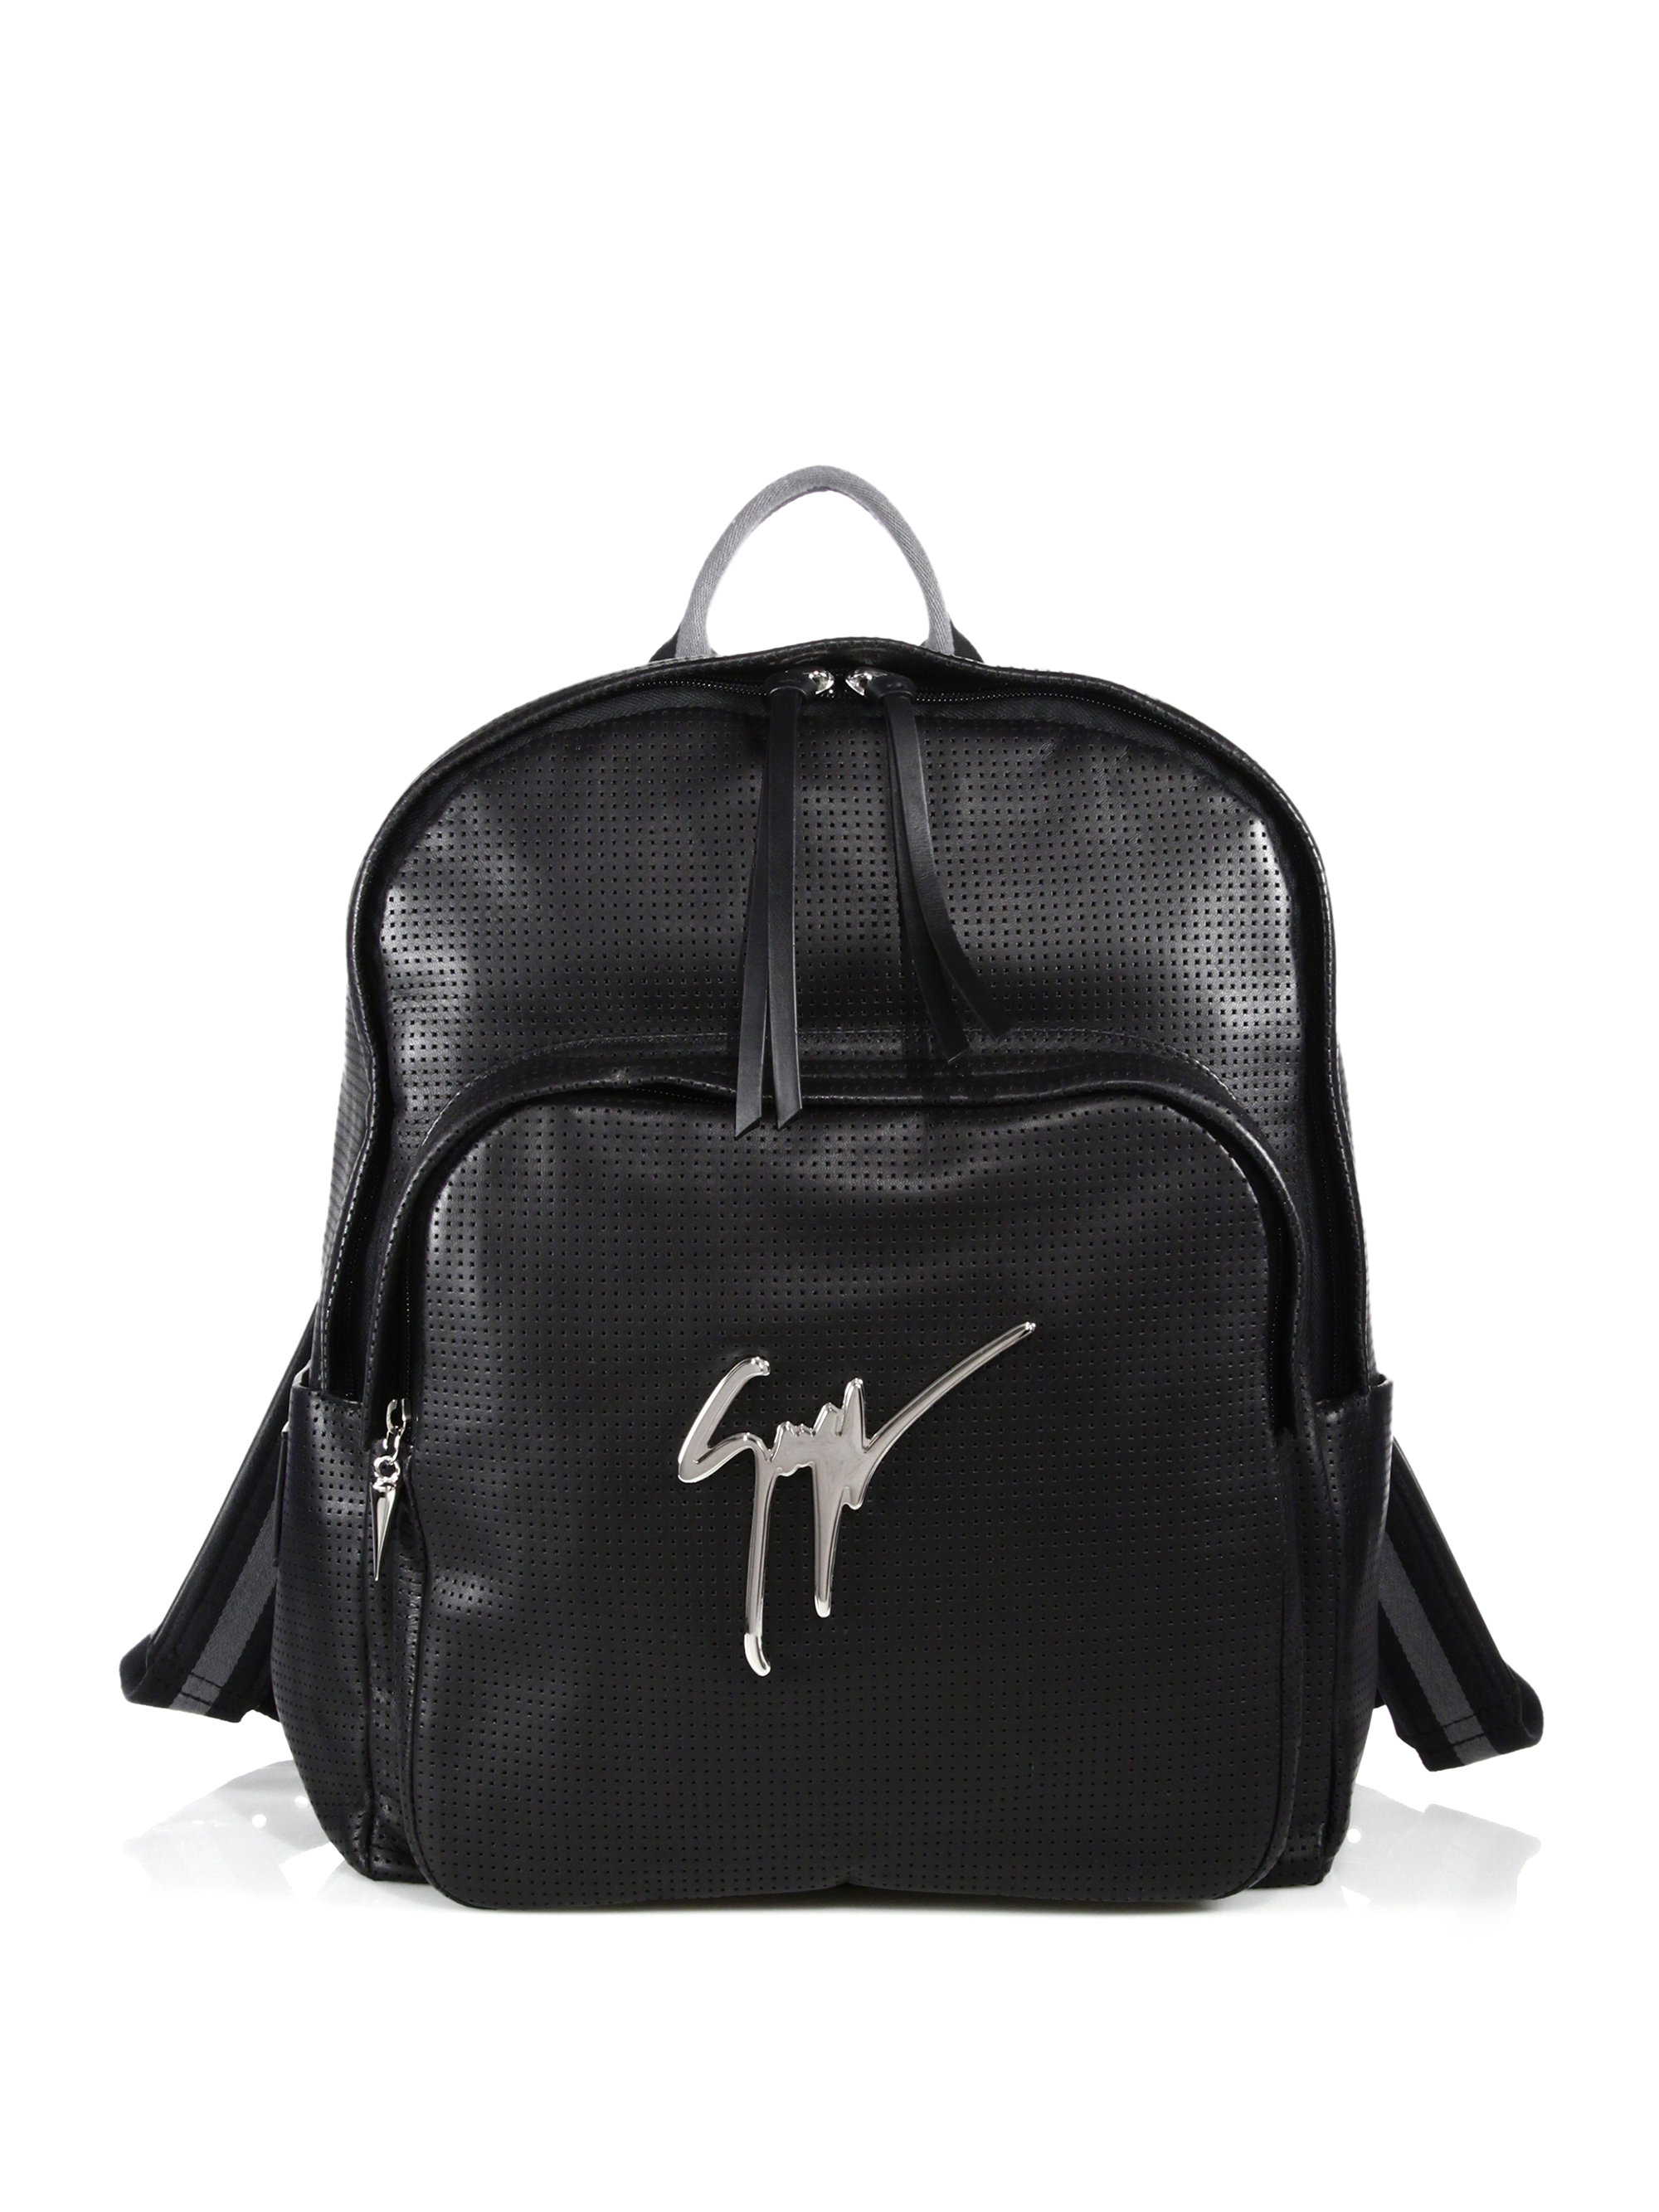 Lyst - Giuseppe Zanotti Perforated Leather Logo Backpack in Black for Men